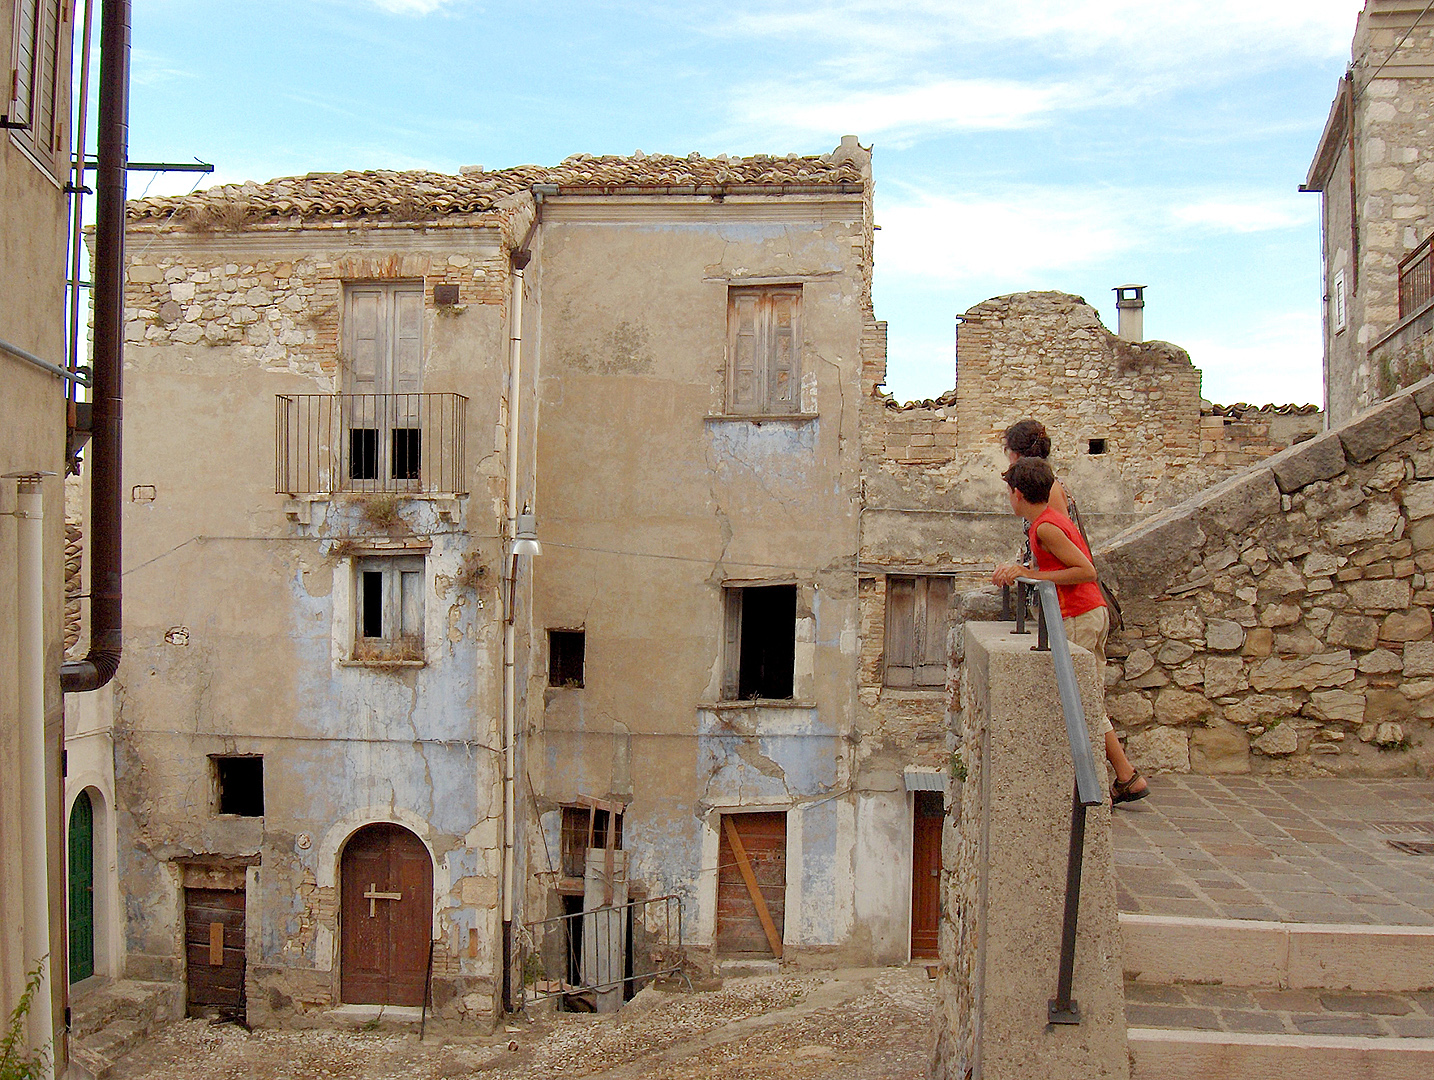 Verlaten huizen (Casoli, Abruzzen), Abandoned houses (Casoli, Abruzzo)